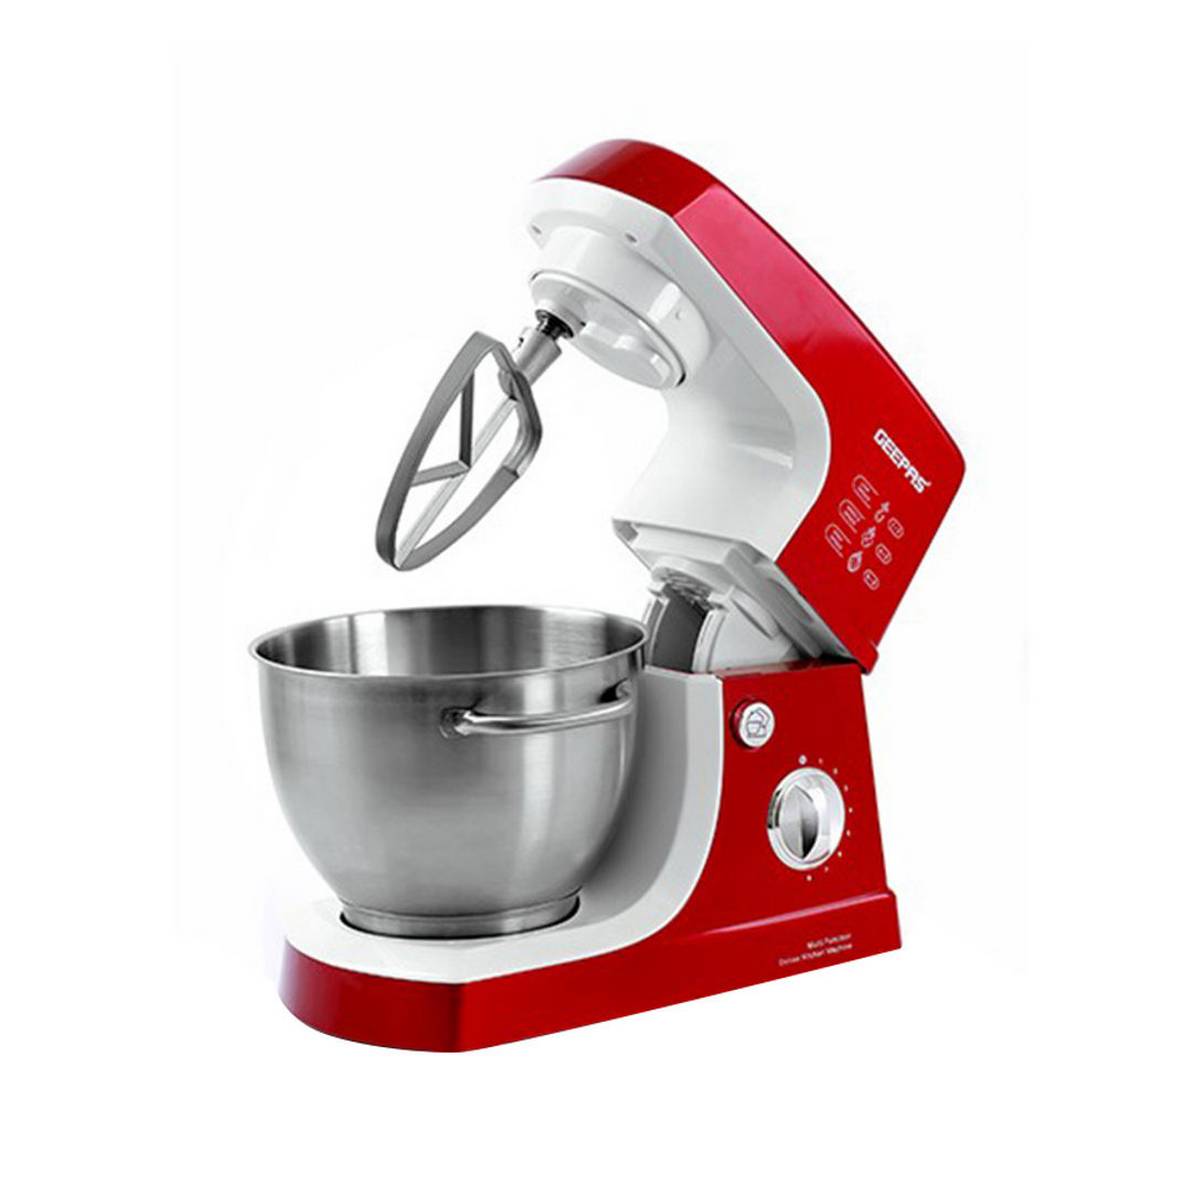 Geepas Kitchen Machine Stand Mixer Dough Maker - GSM5442, Red